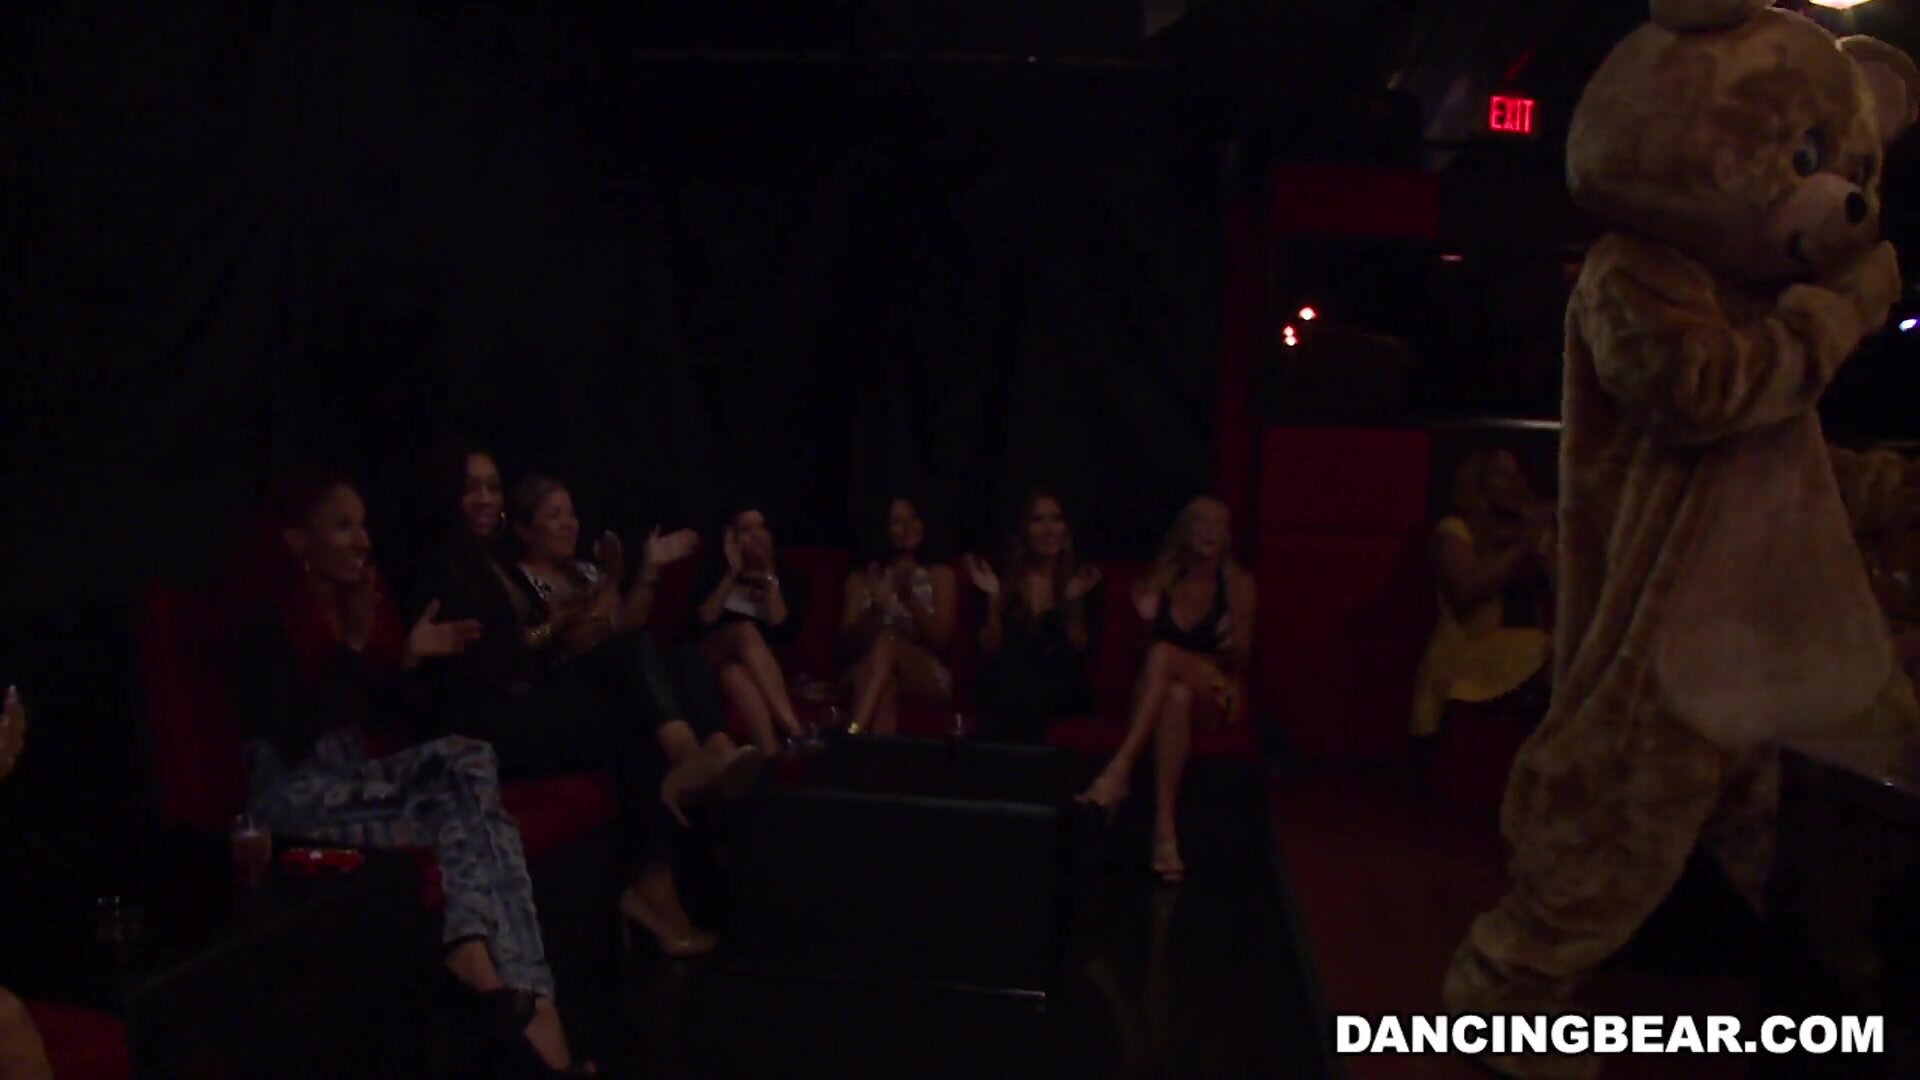 DANCING BEAR - Crazy Party Girls Suckin' Male Stripper